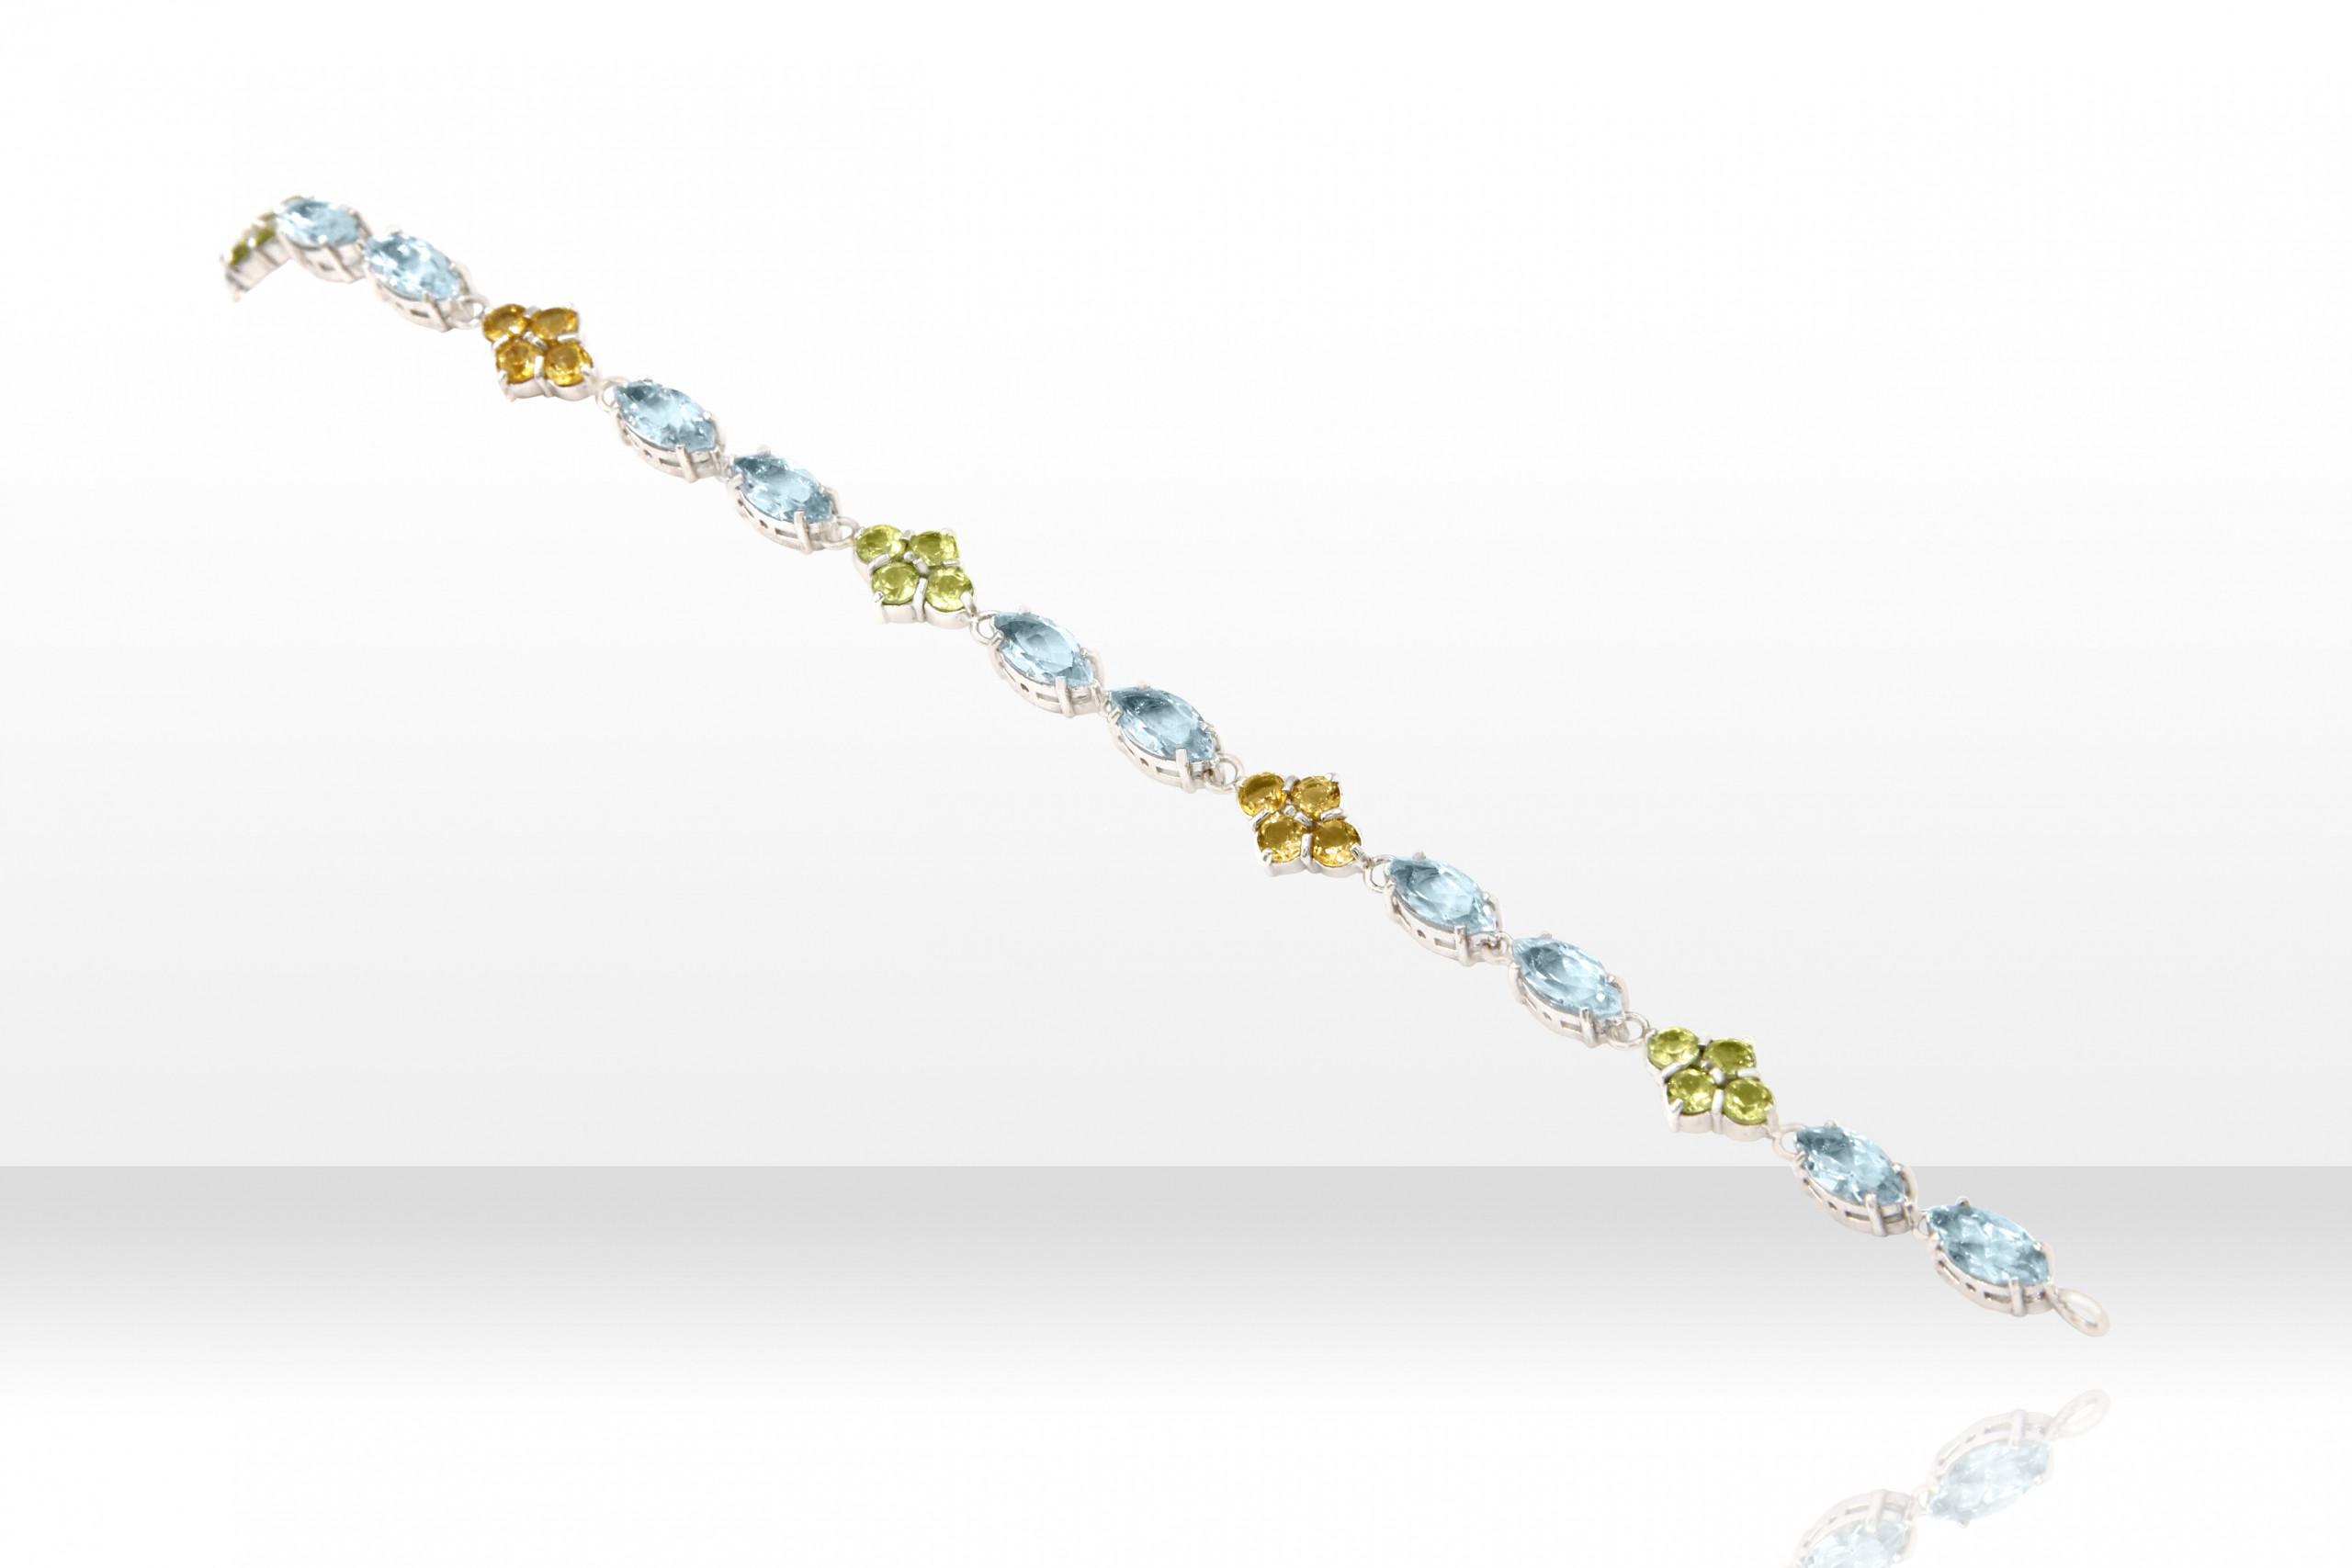 14K White Gold Anklet Bracelet with Blue Topaz Gemstones 9 Inches | eBay